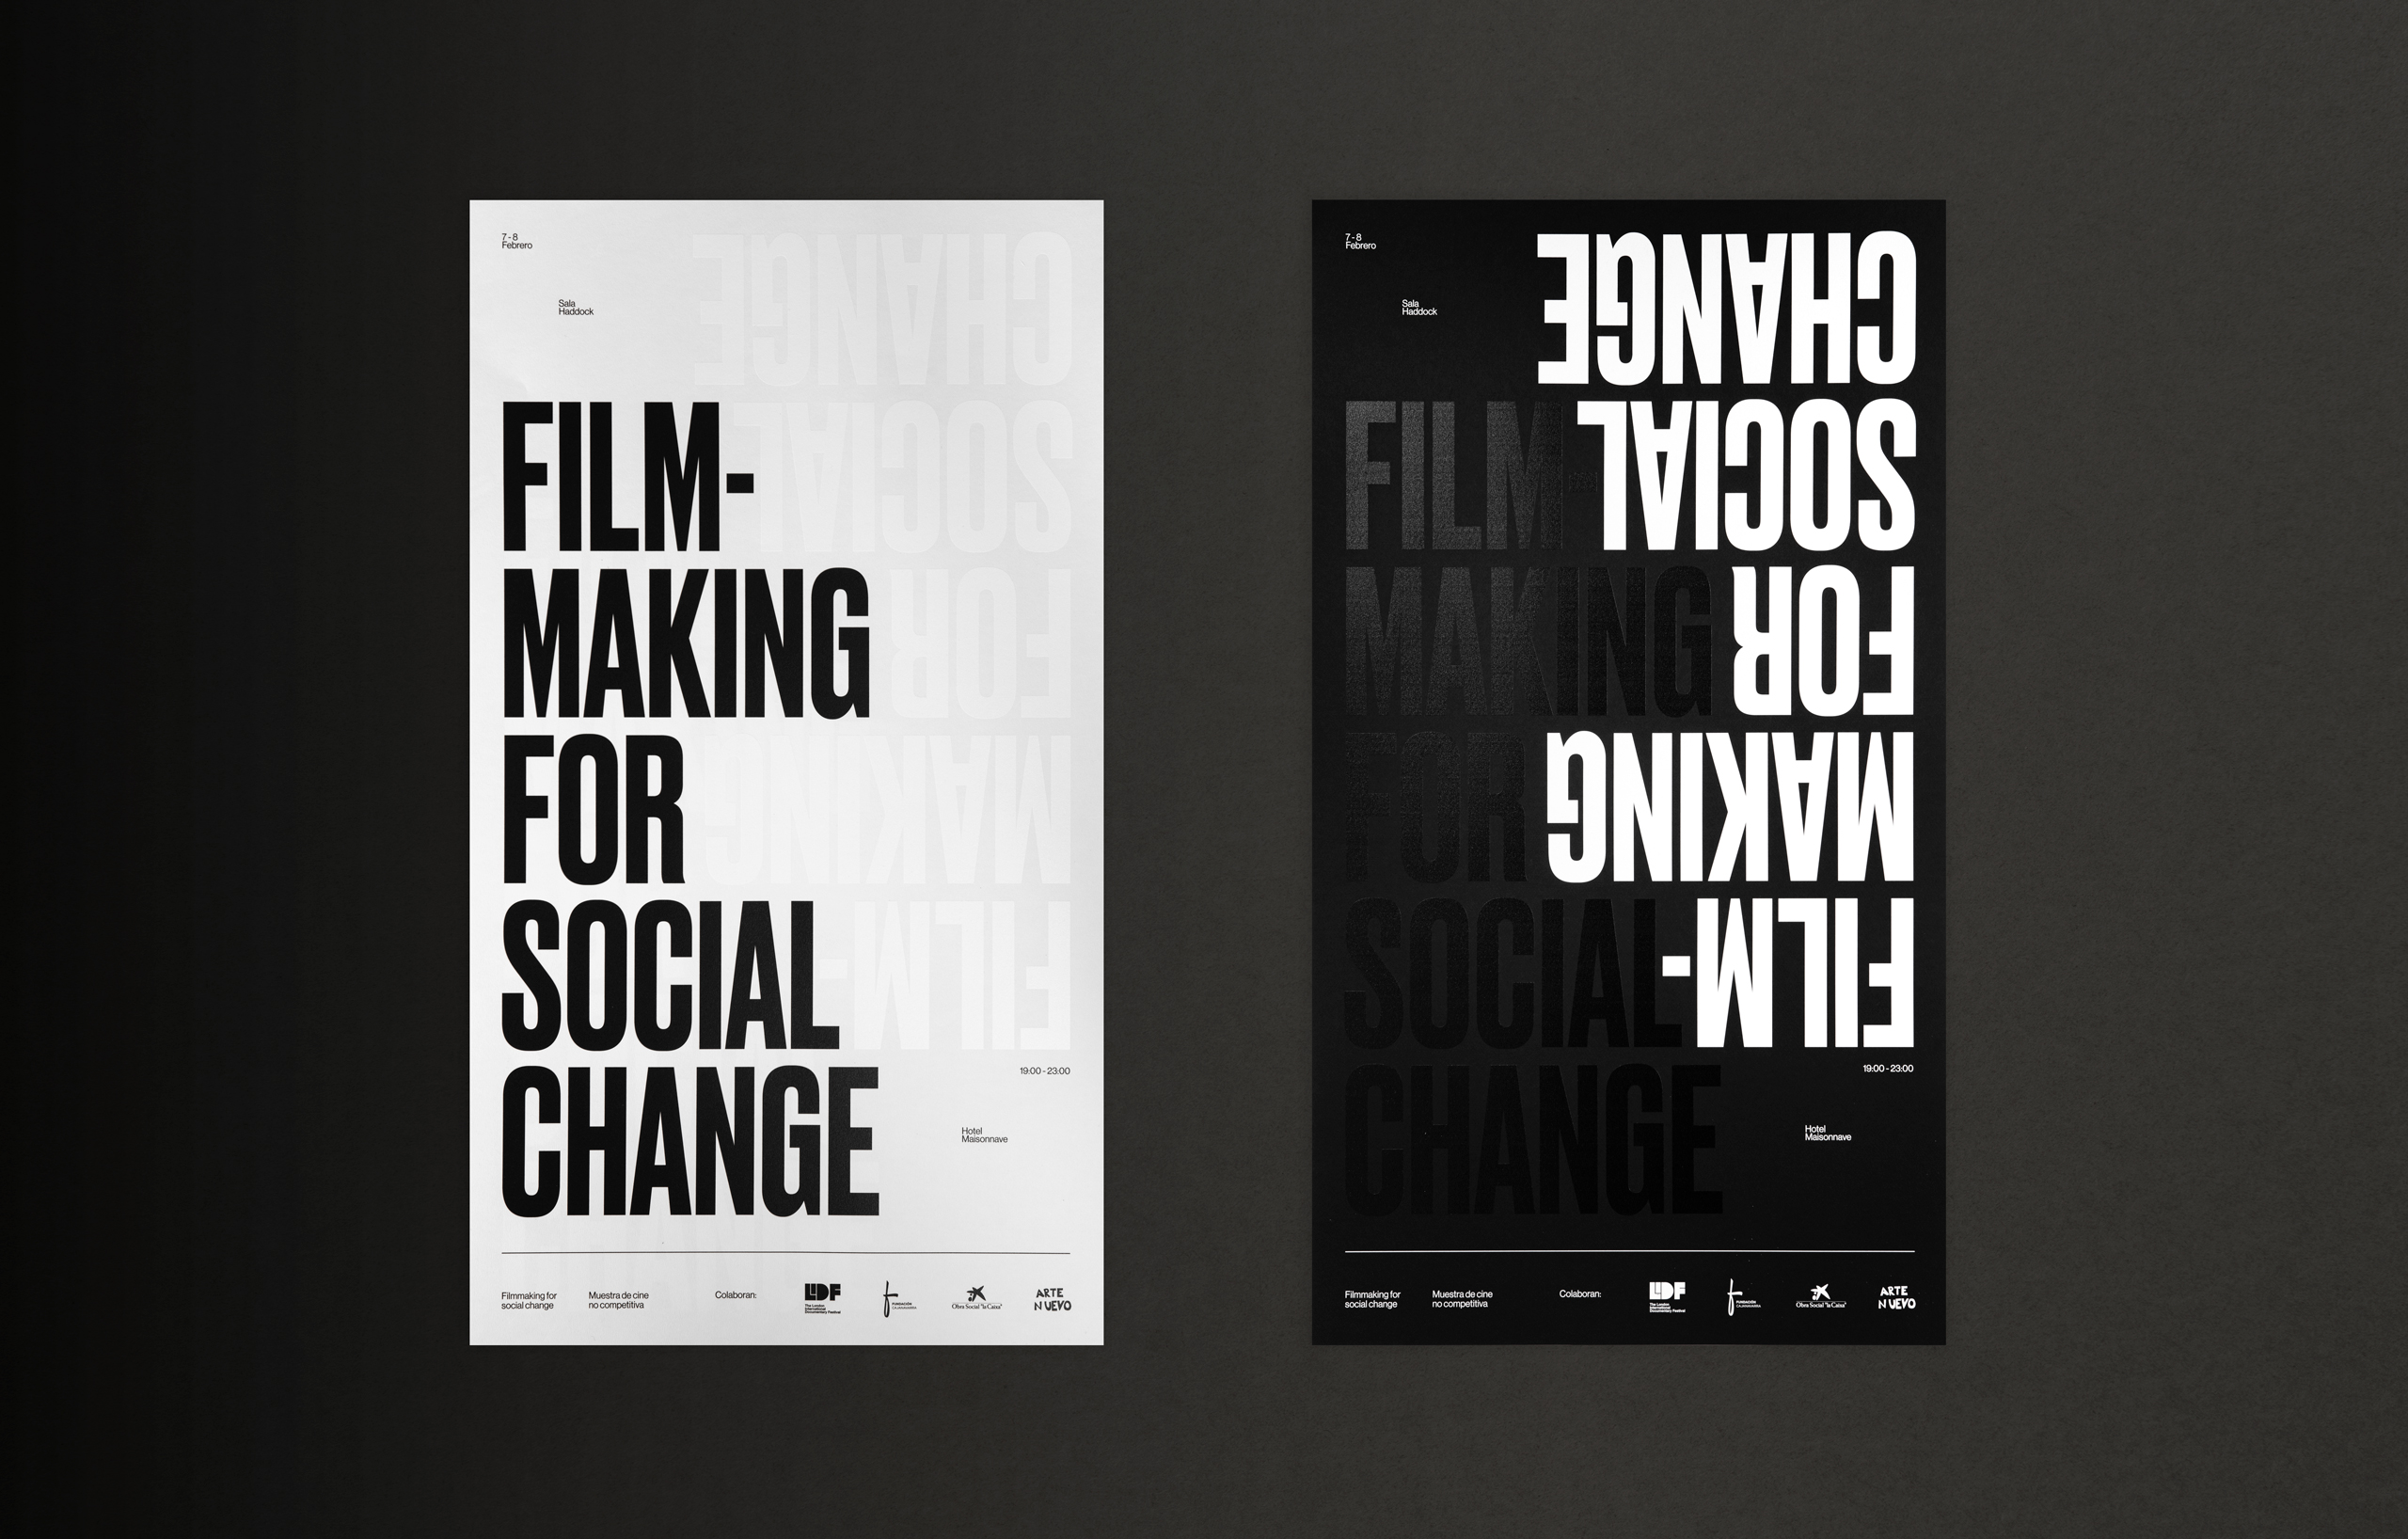 FILMMAKING FOR SOCIAL CHANGE by silencio - Creative Work